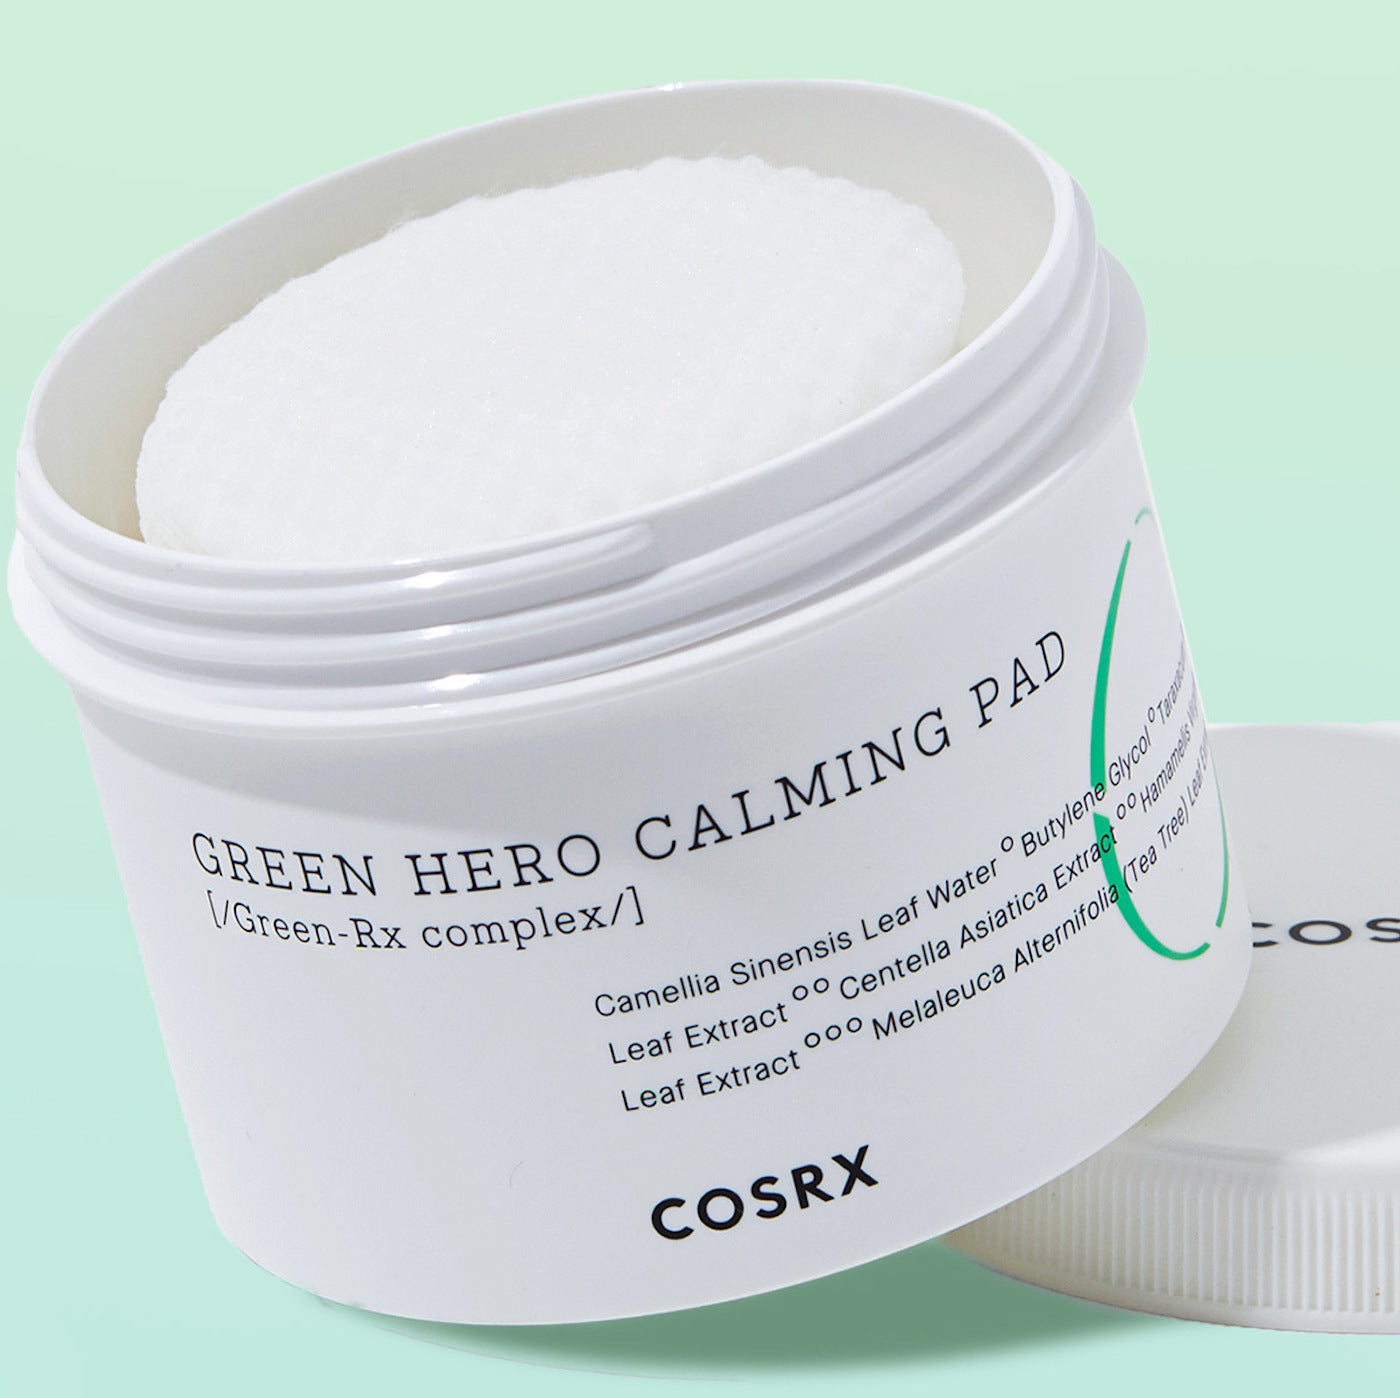 CosRx One Step Green Hero Calming Pad